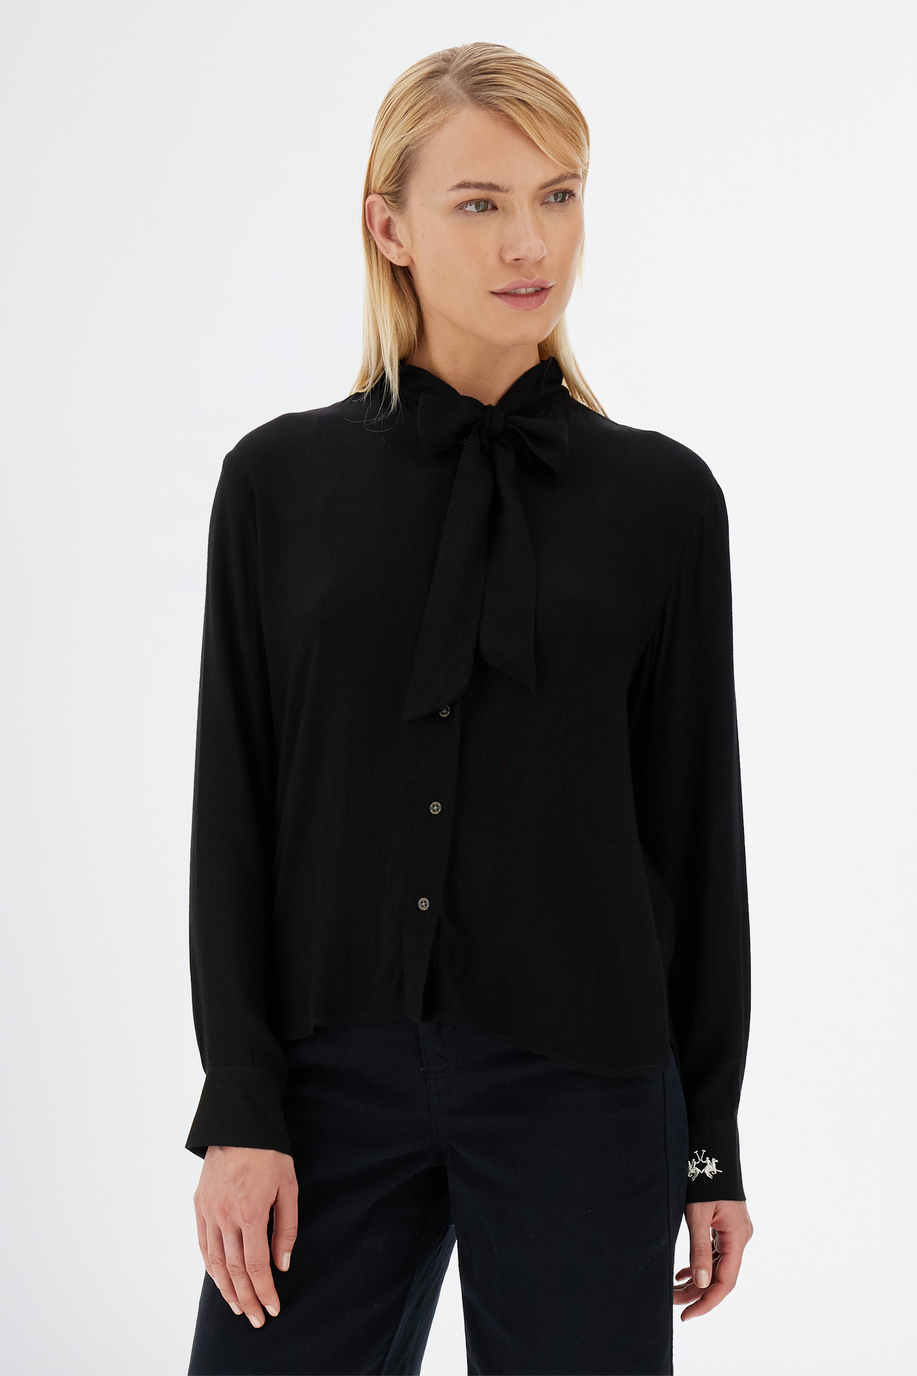 Women’s Argentina shirt in viscose satin regular fit long sleeves - Elegant looks for her | La Martina - Official Online Shop